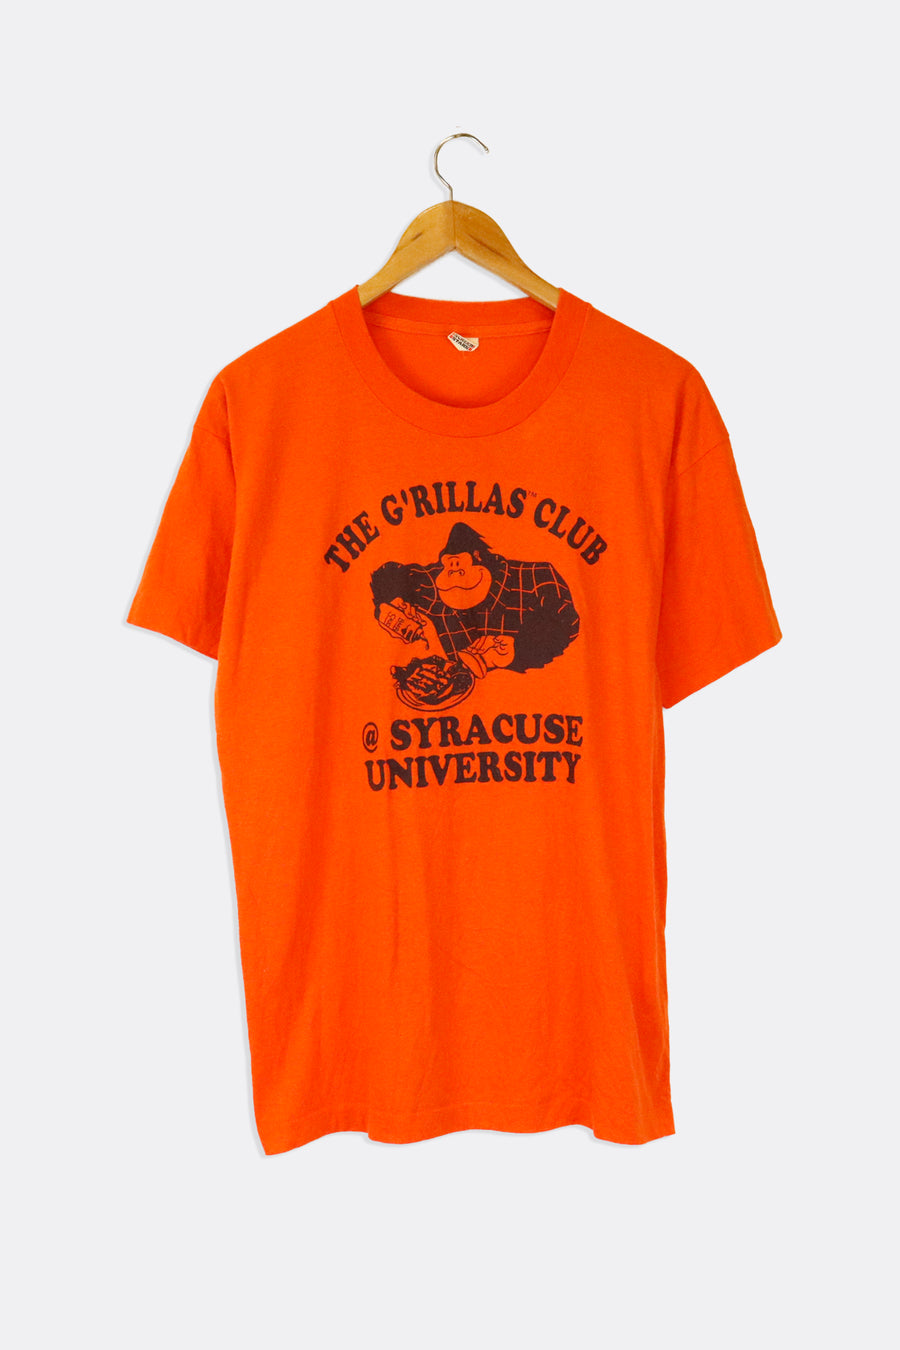 Vintage G'rillas Club @ Syracuse University Grilling Gorilla T Shirt Sz XL